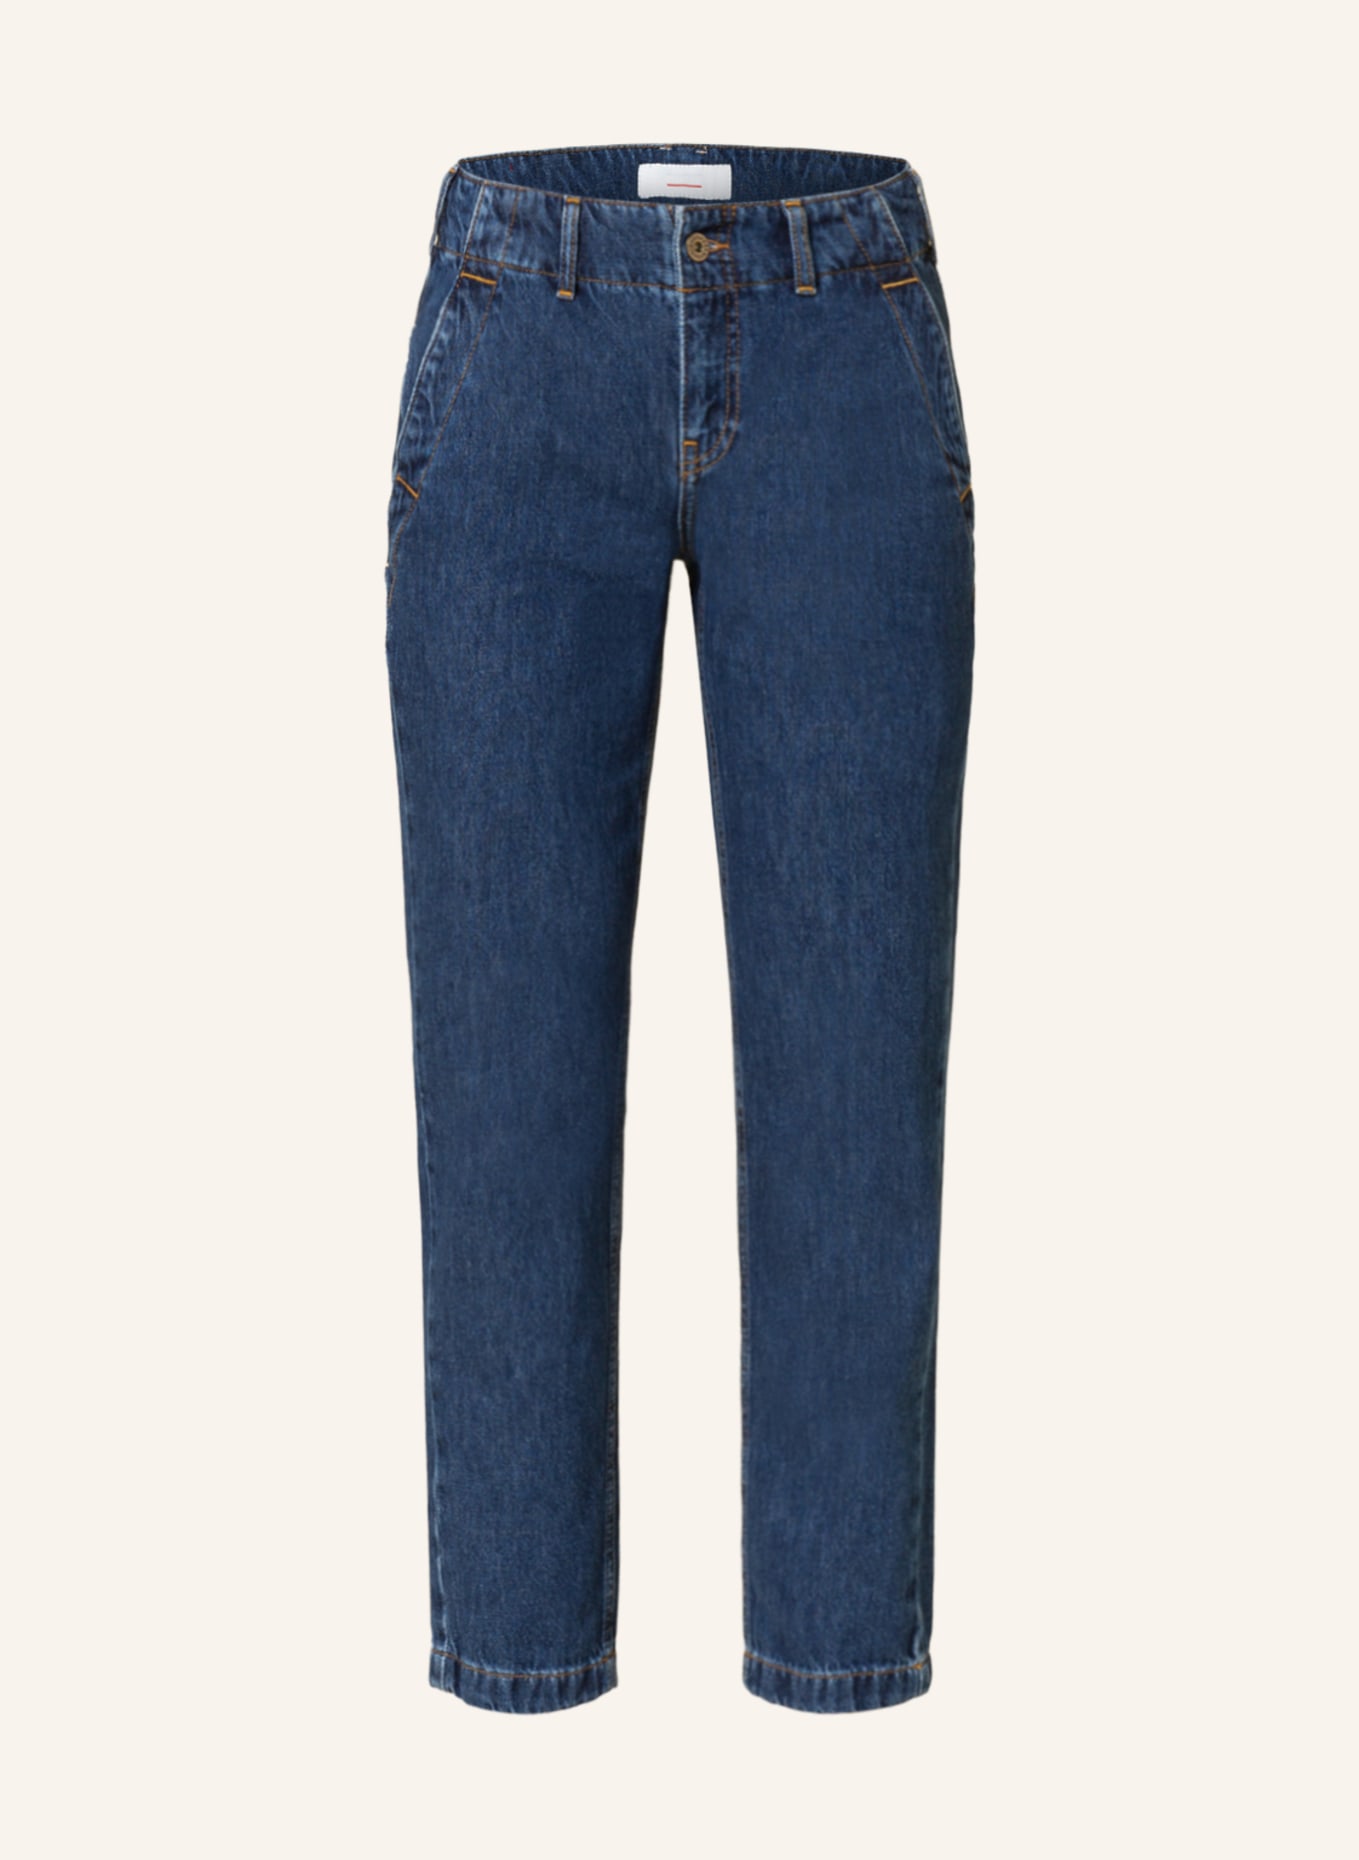 CINQUE Jeans CIHAMELIN, Farbe: 67 dunkelblau (Bild 1)